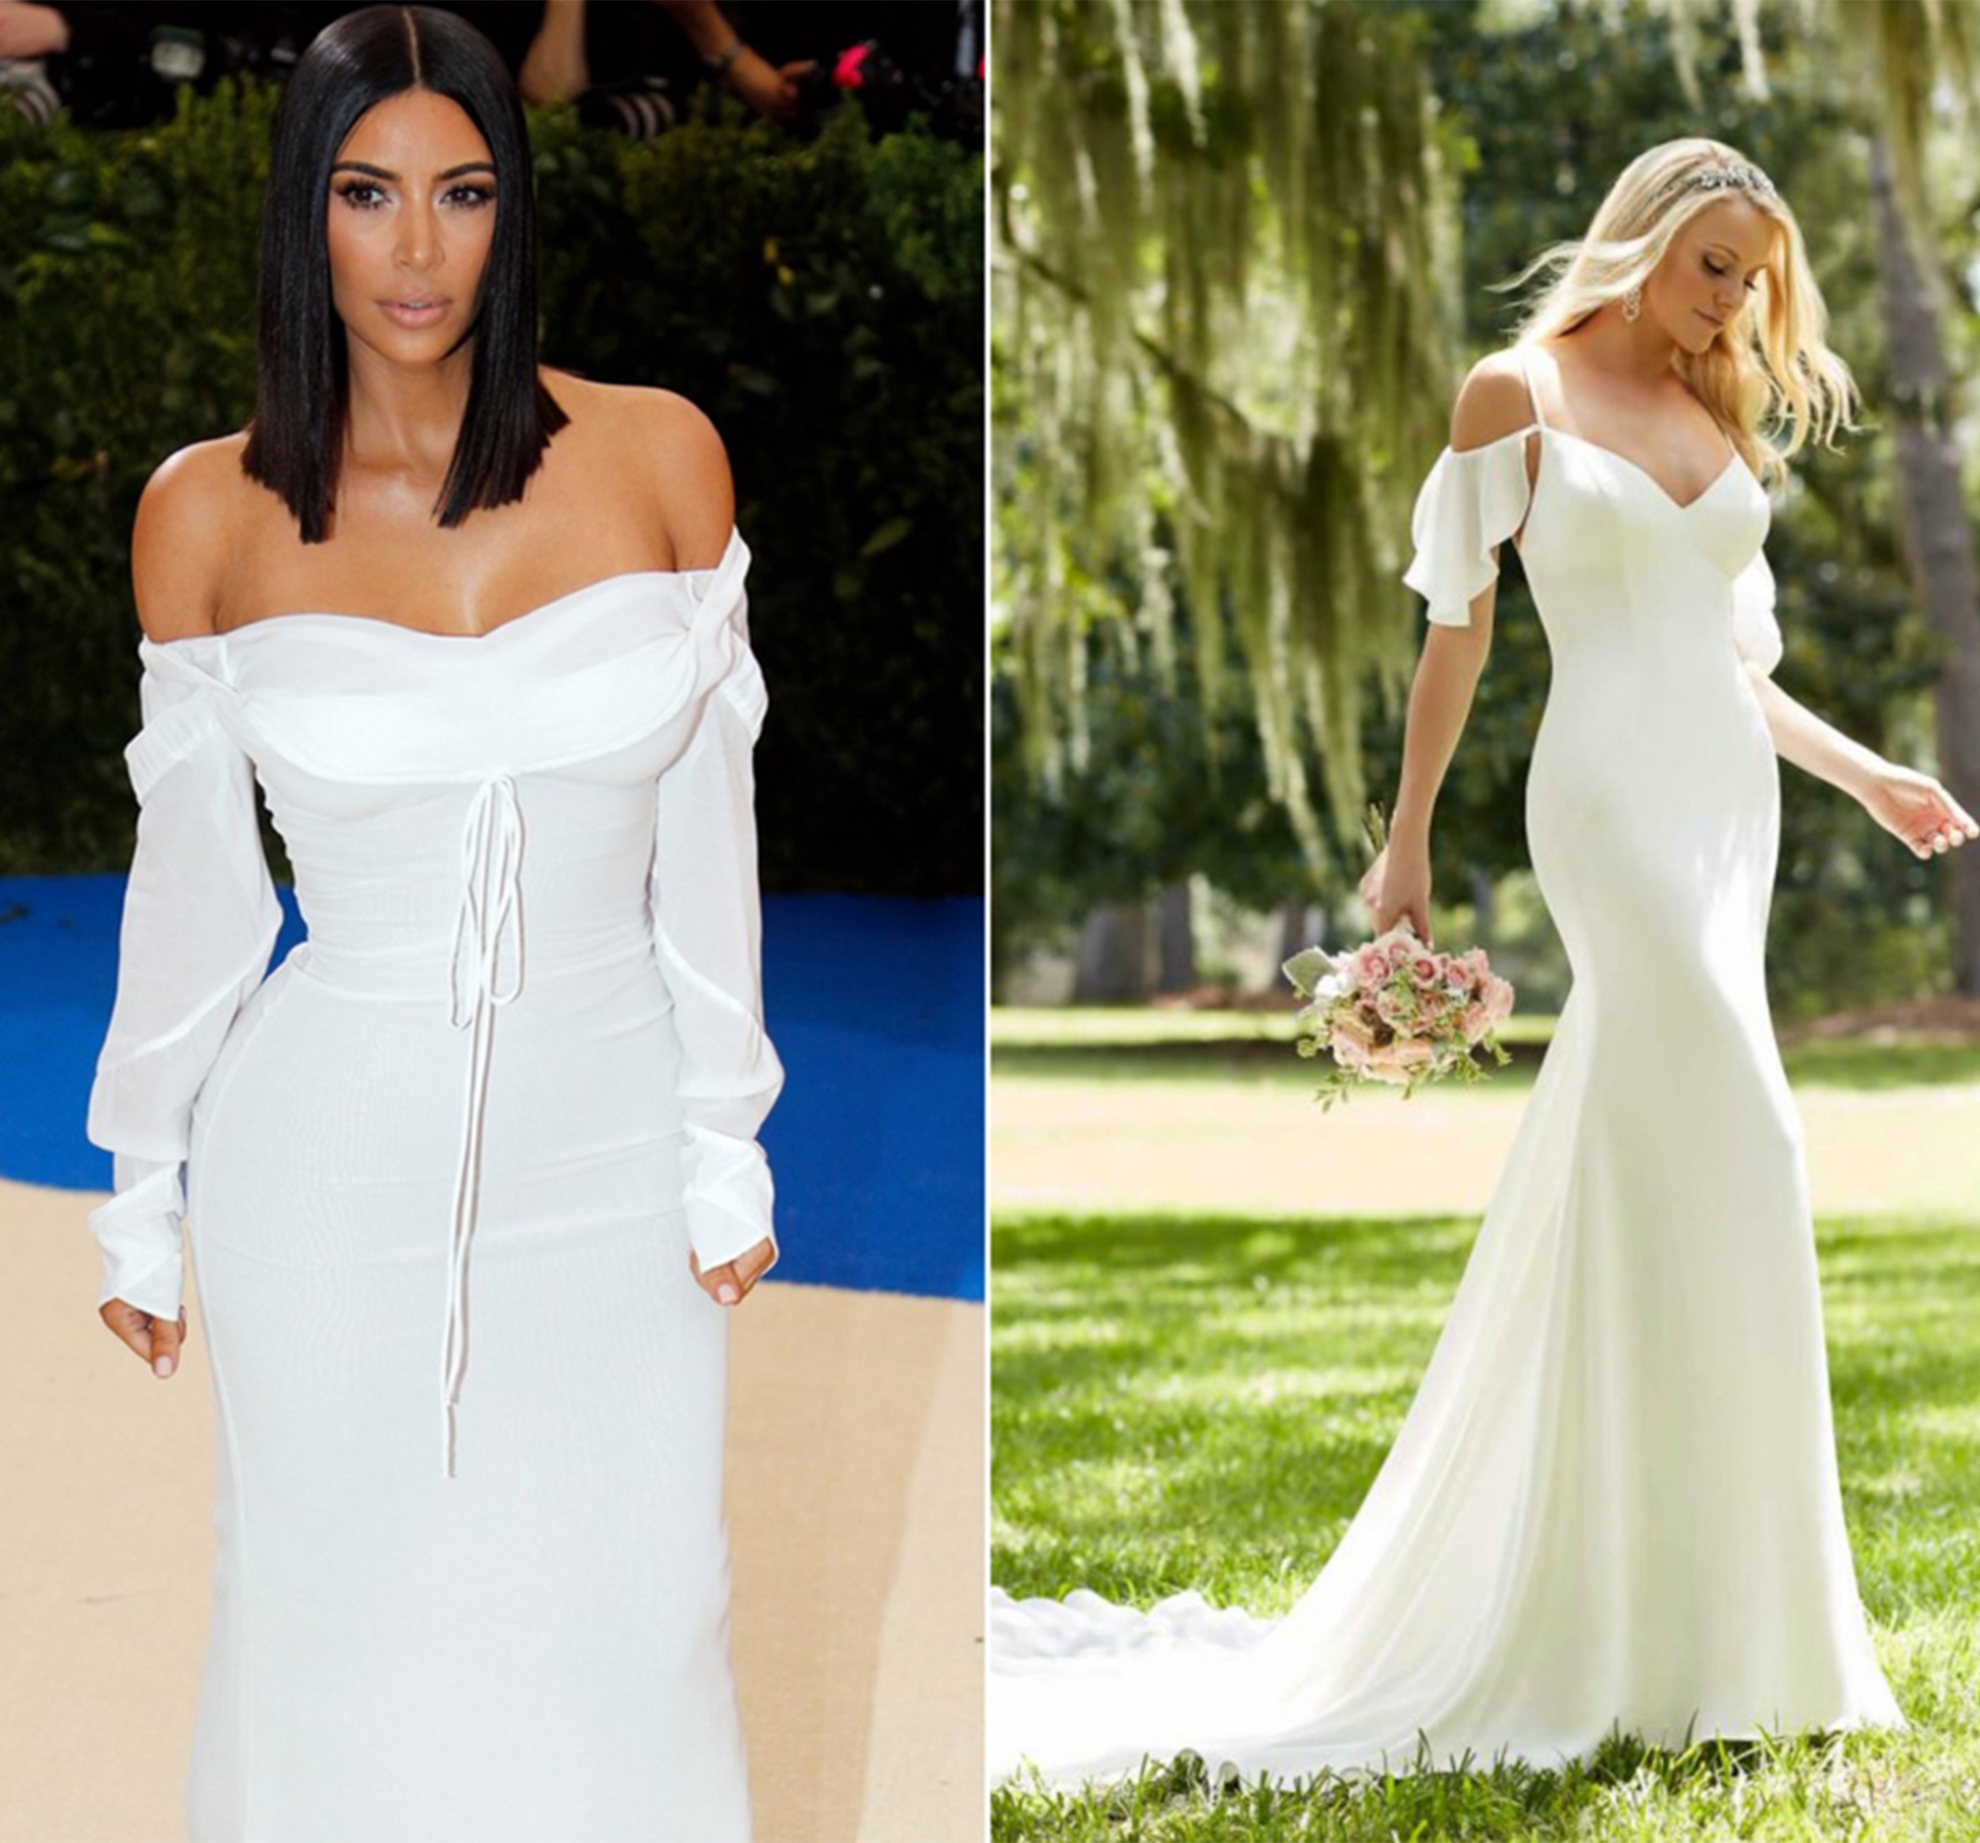 Kim Kardashian’s white Met Gala dress as inspiration for a wedding dress